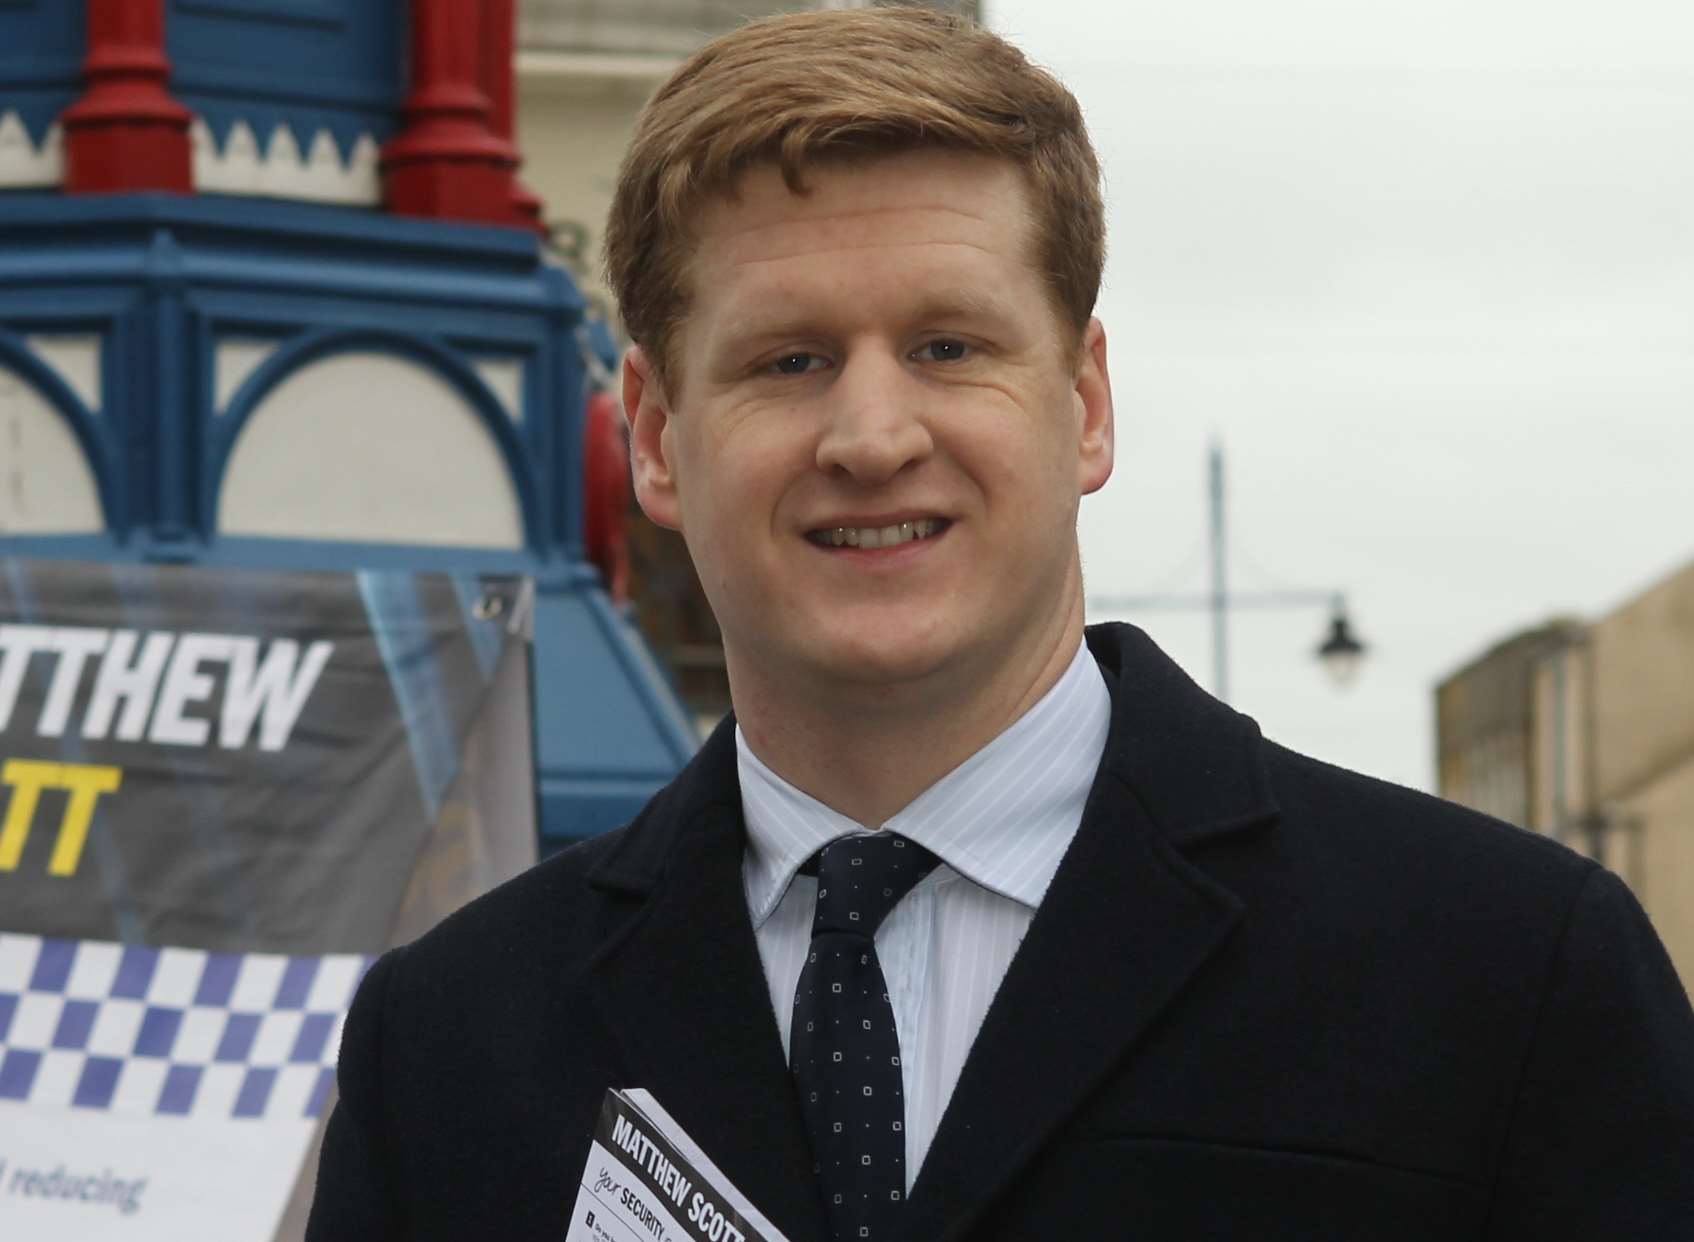 Matthew Scott, Kent's police and crime commissioner